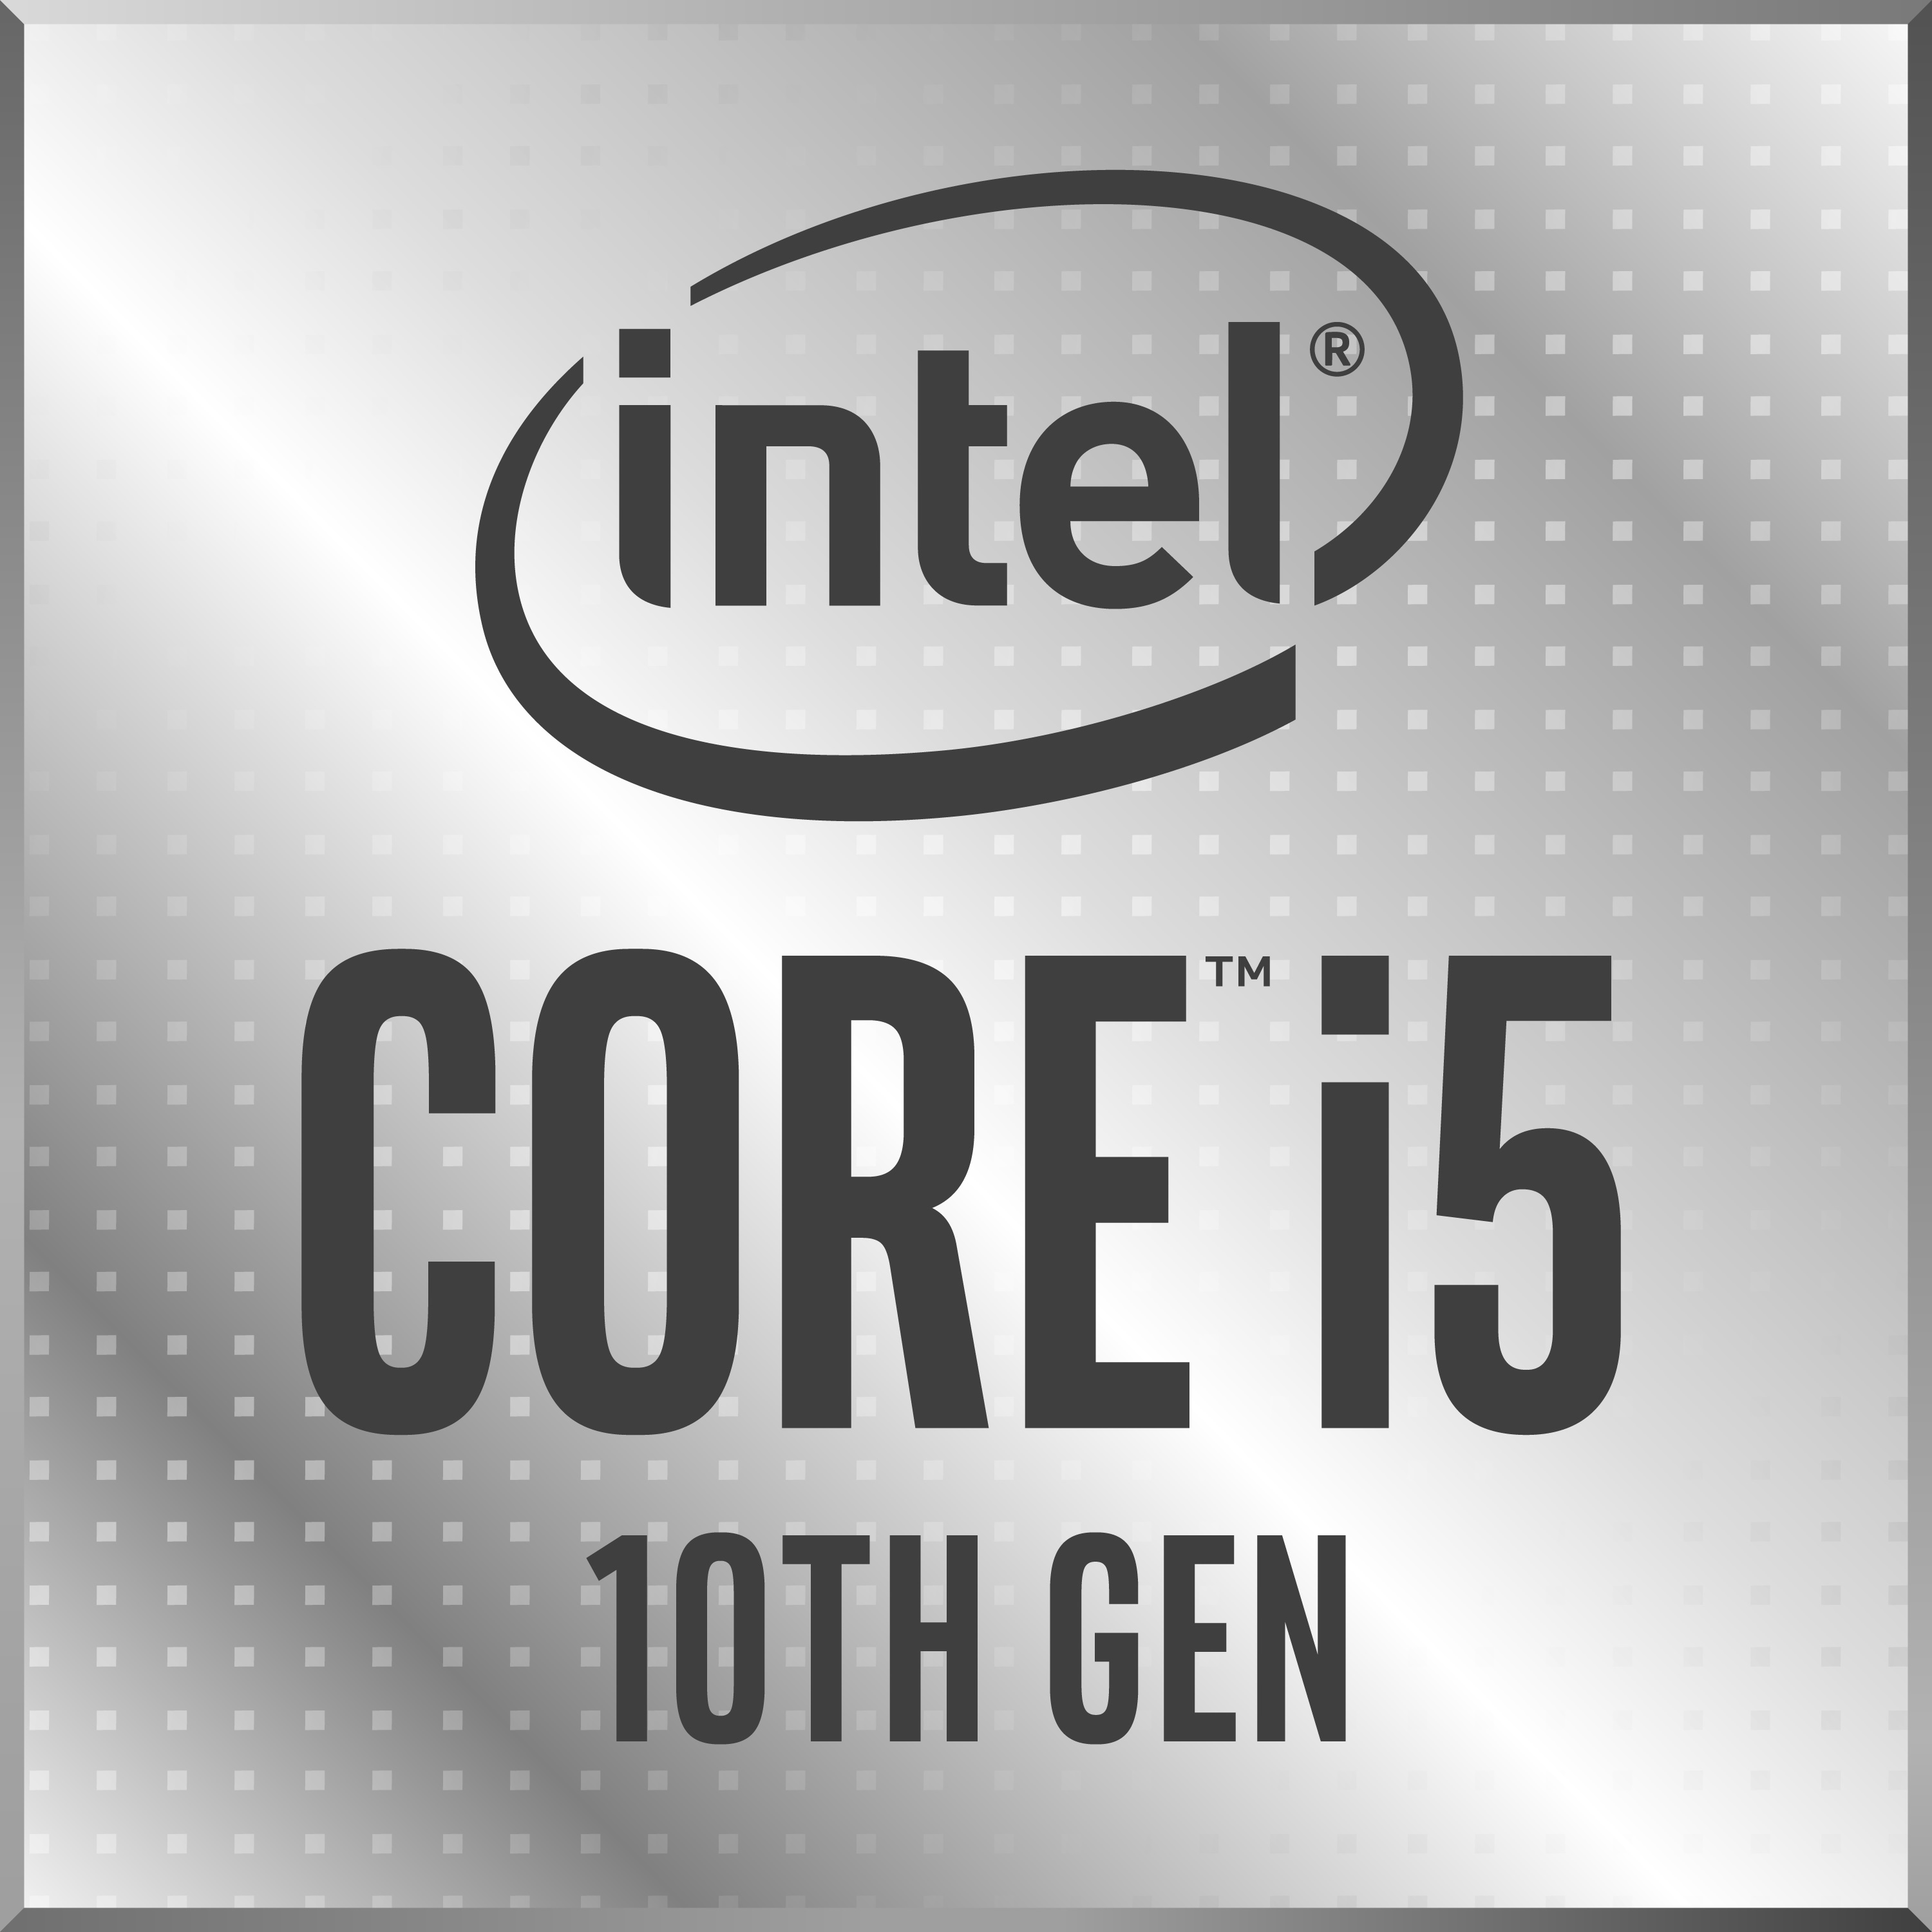 blaas gat Misbruik Omhoog gaan Intel Core i5-10400F Processor - Benchmarks and Specs - NotebookCheck.net  Tech